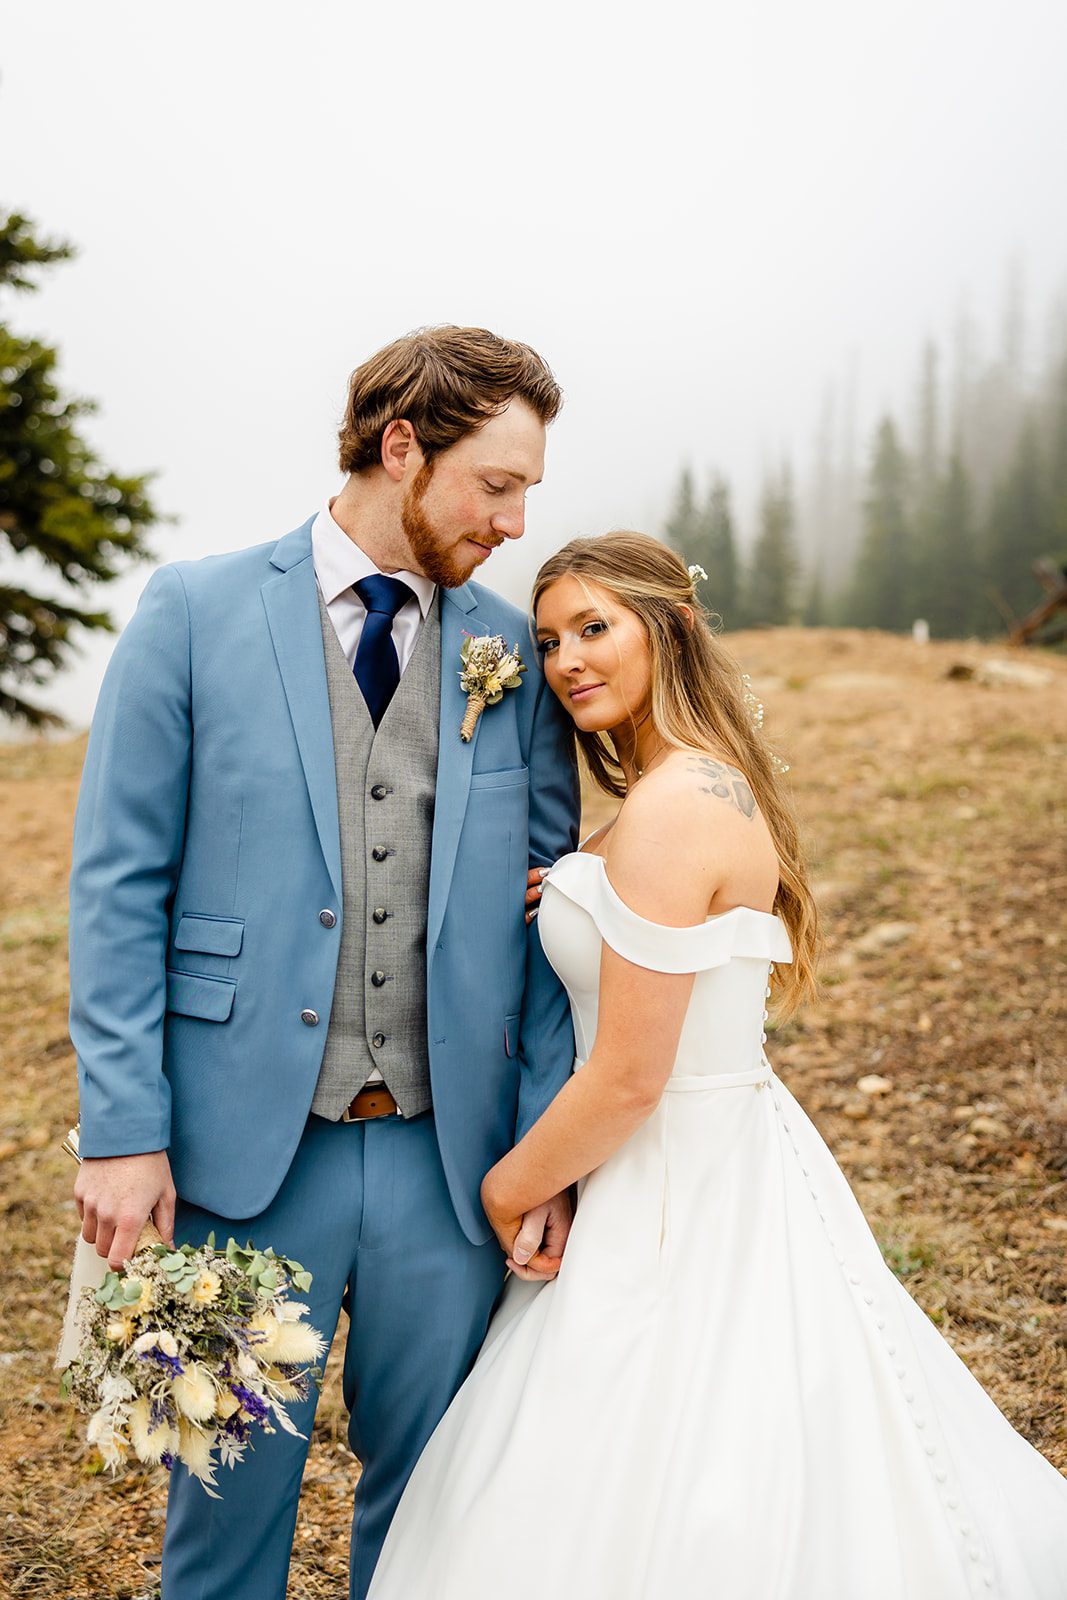 Bride and groom at Estes Park Colorado Hidden Valley Elopement in Rocky Mountain National Park